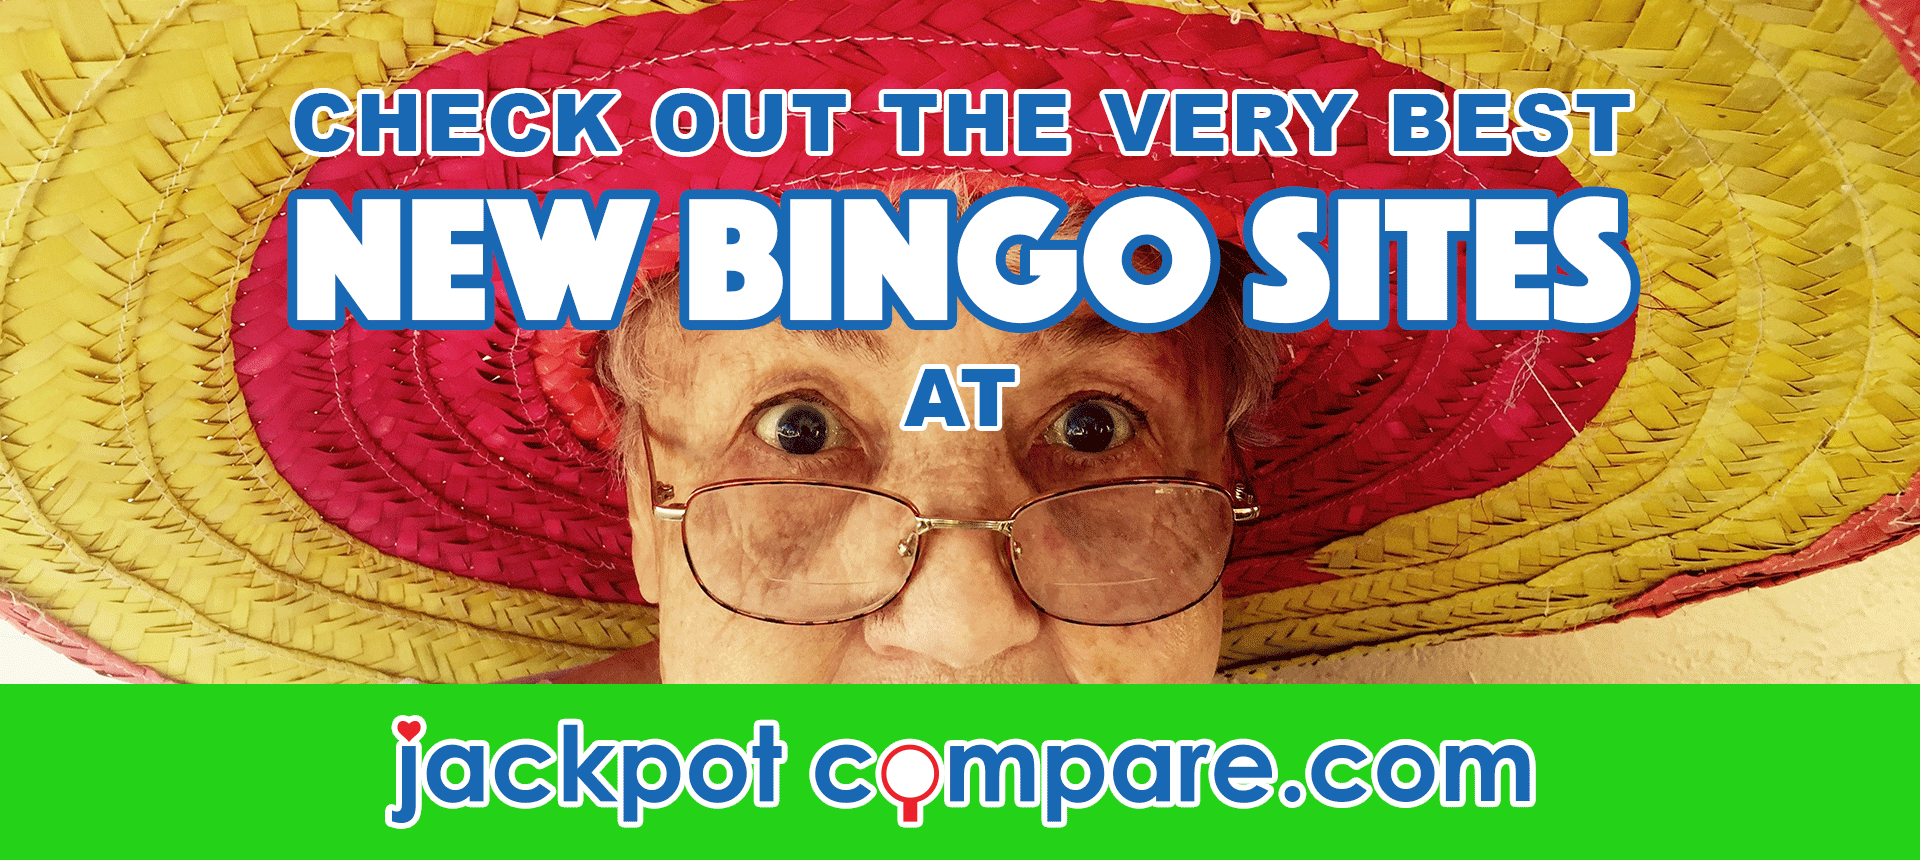 new_bingo_sites_banner_advertisement01